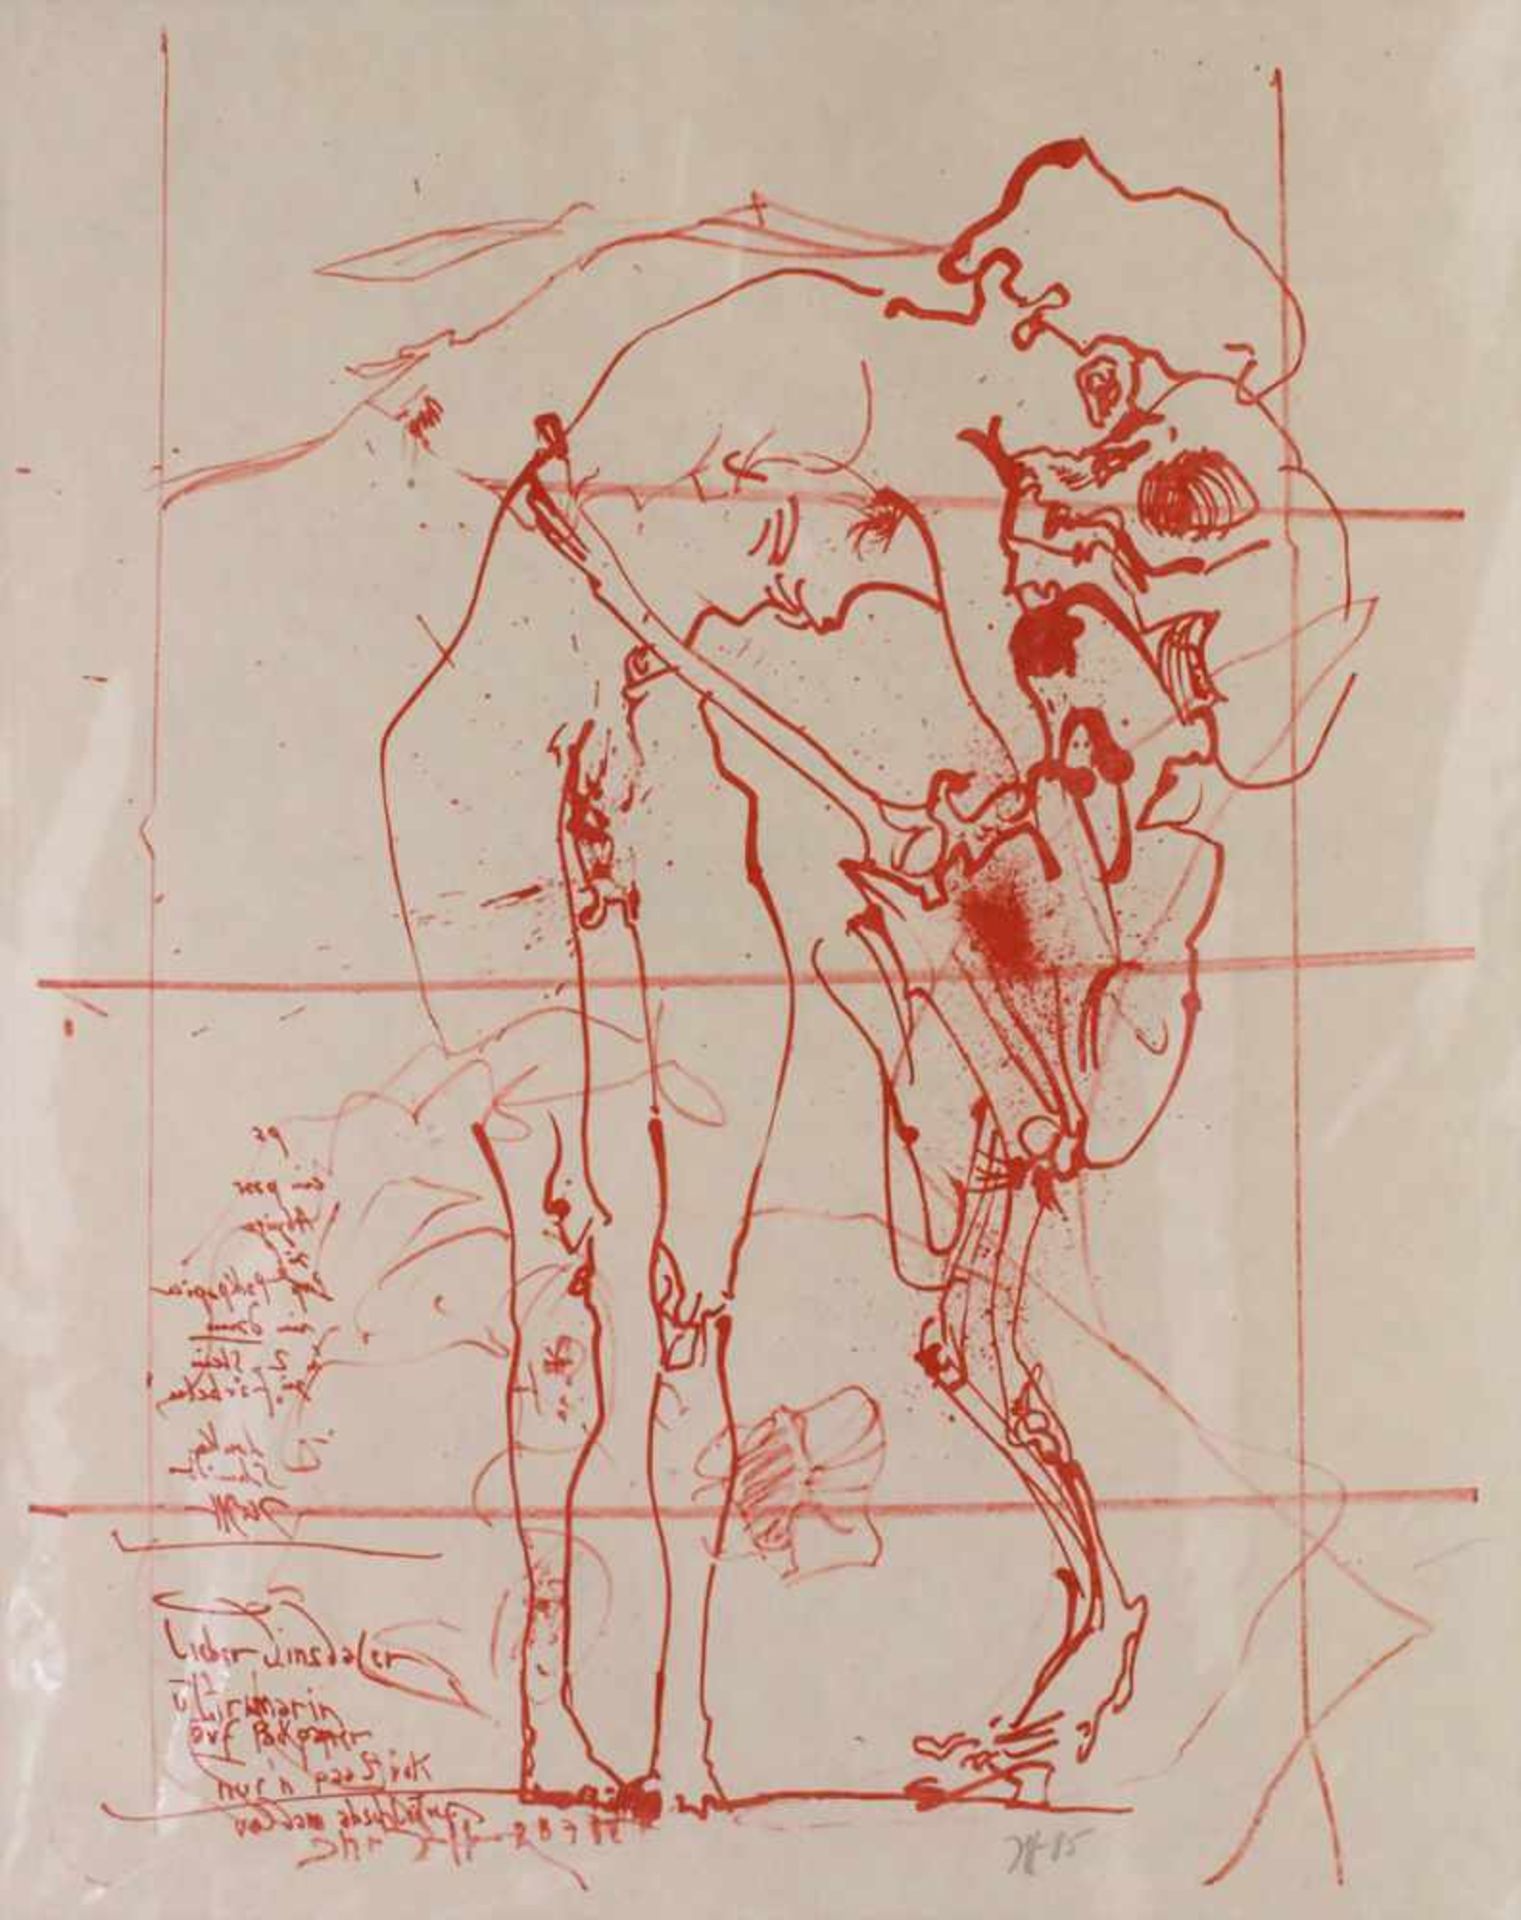 Horst Janssen (1929-1995), 'Lieber Tinsdaler'Technik: Lithografie auf Papier, Datierung: 1985, - Image 4 of 7